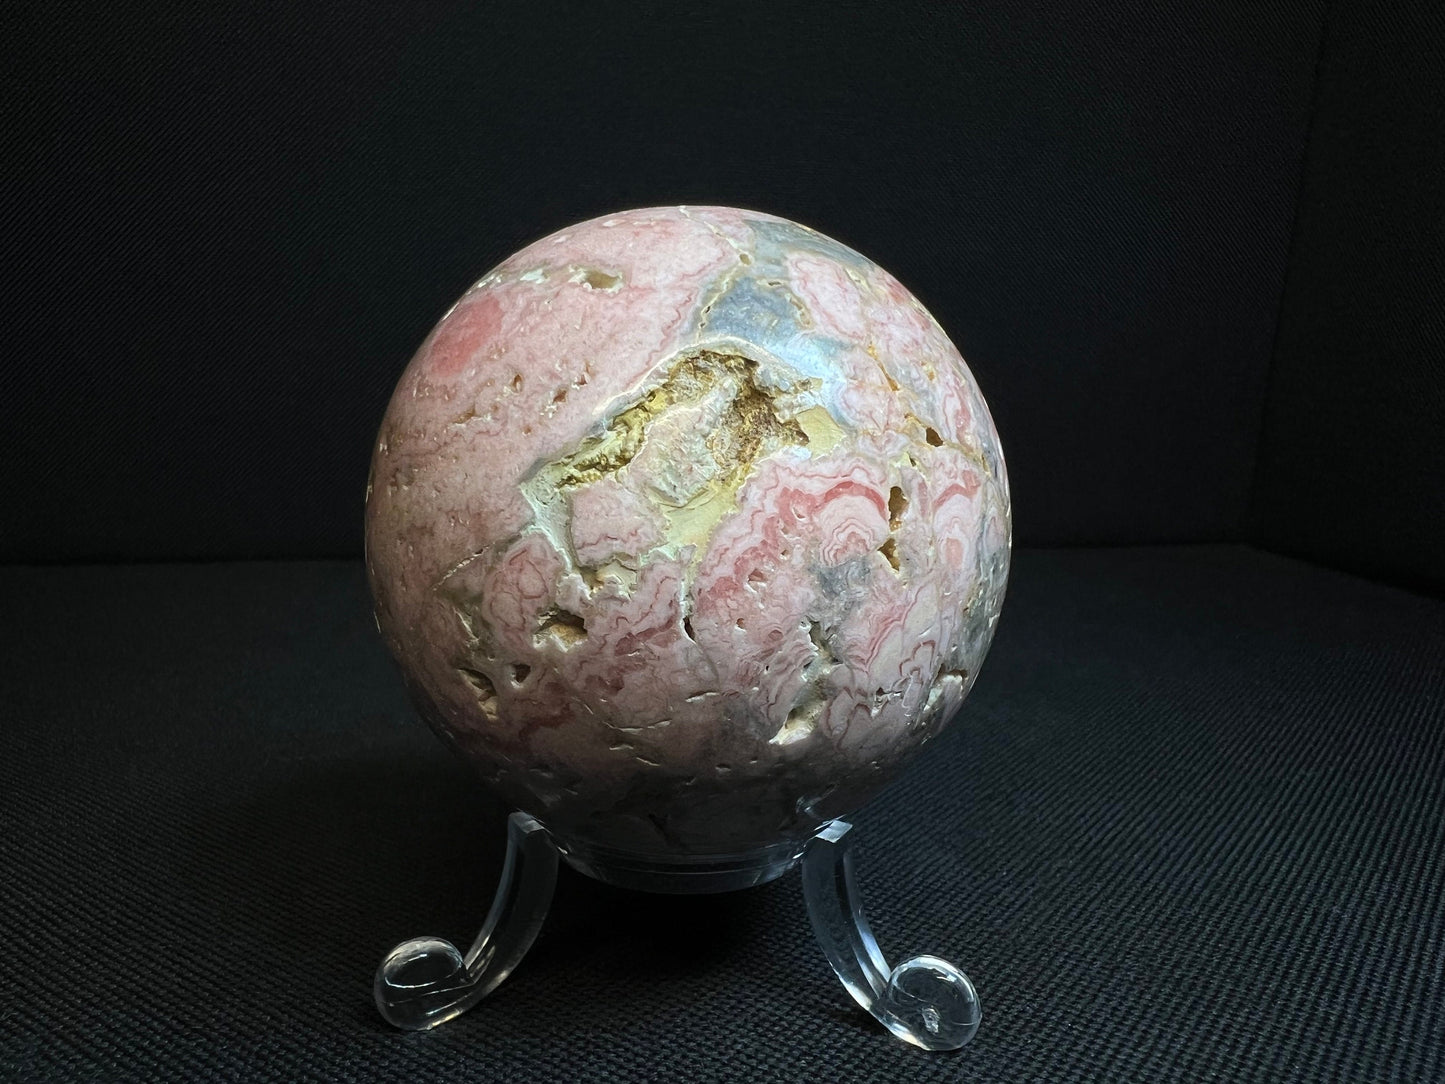 Stunning Rhodochrosite Sphere (Stand Included)- Home Decor, Statement Piece